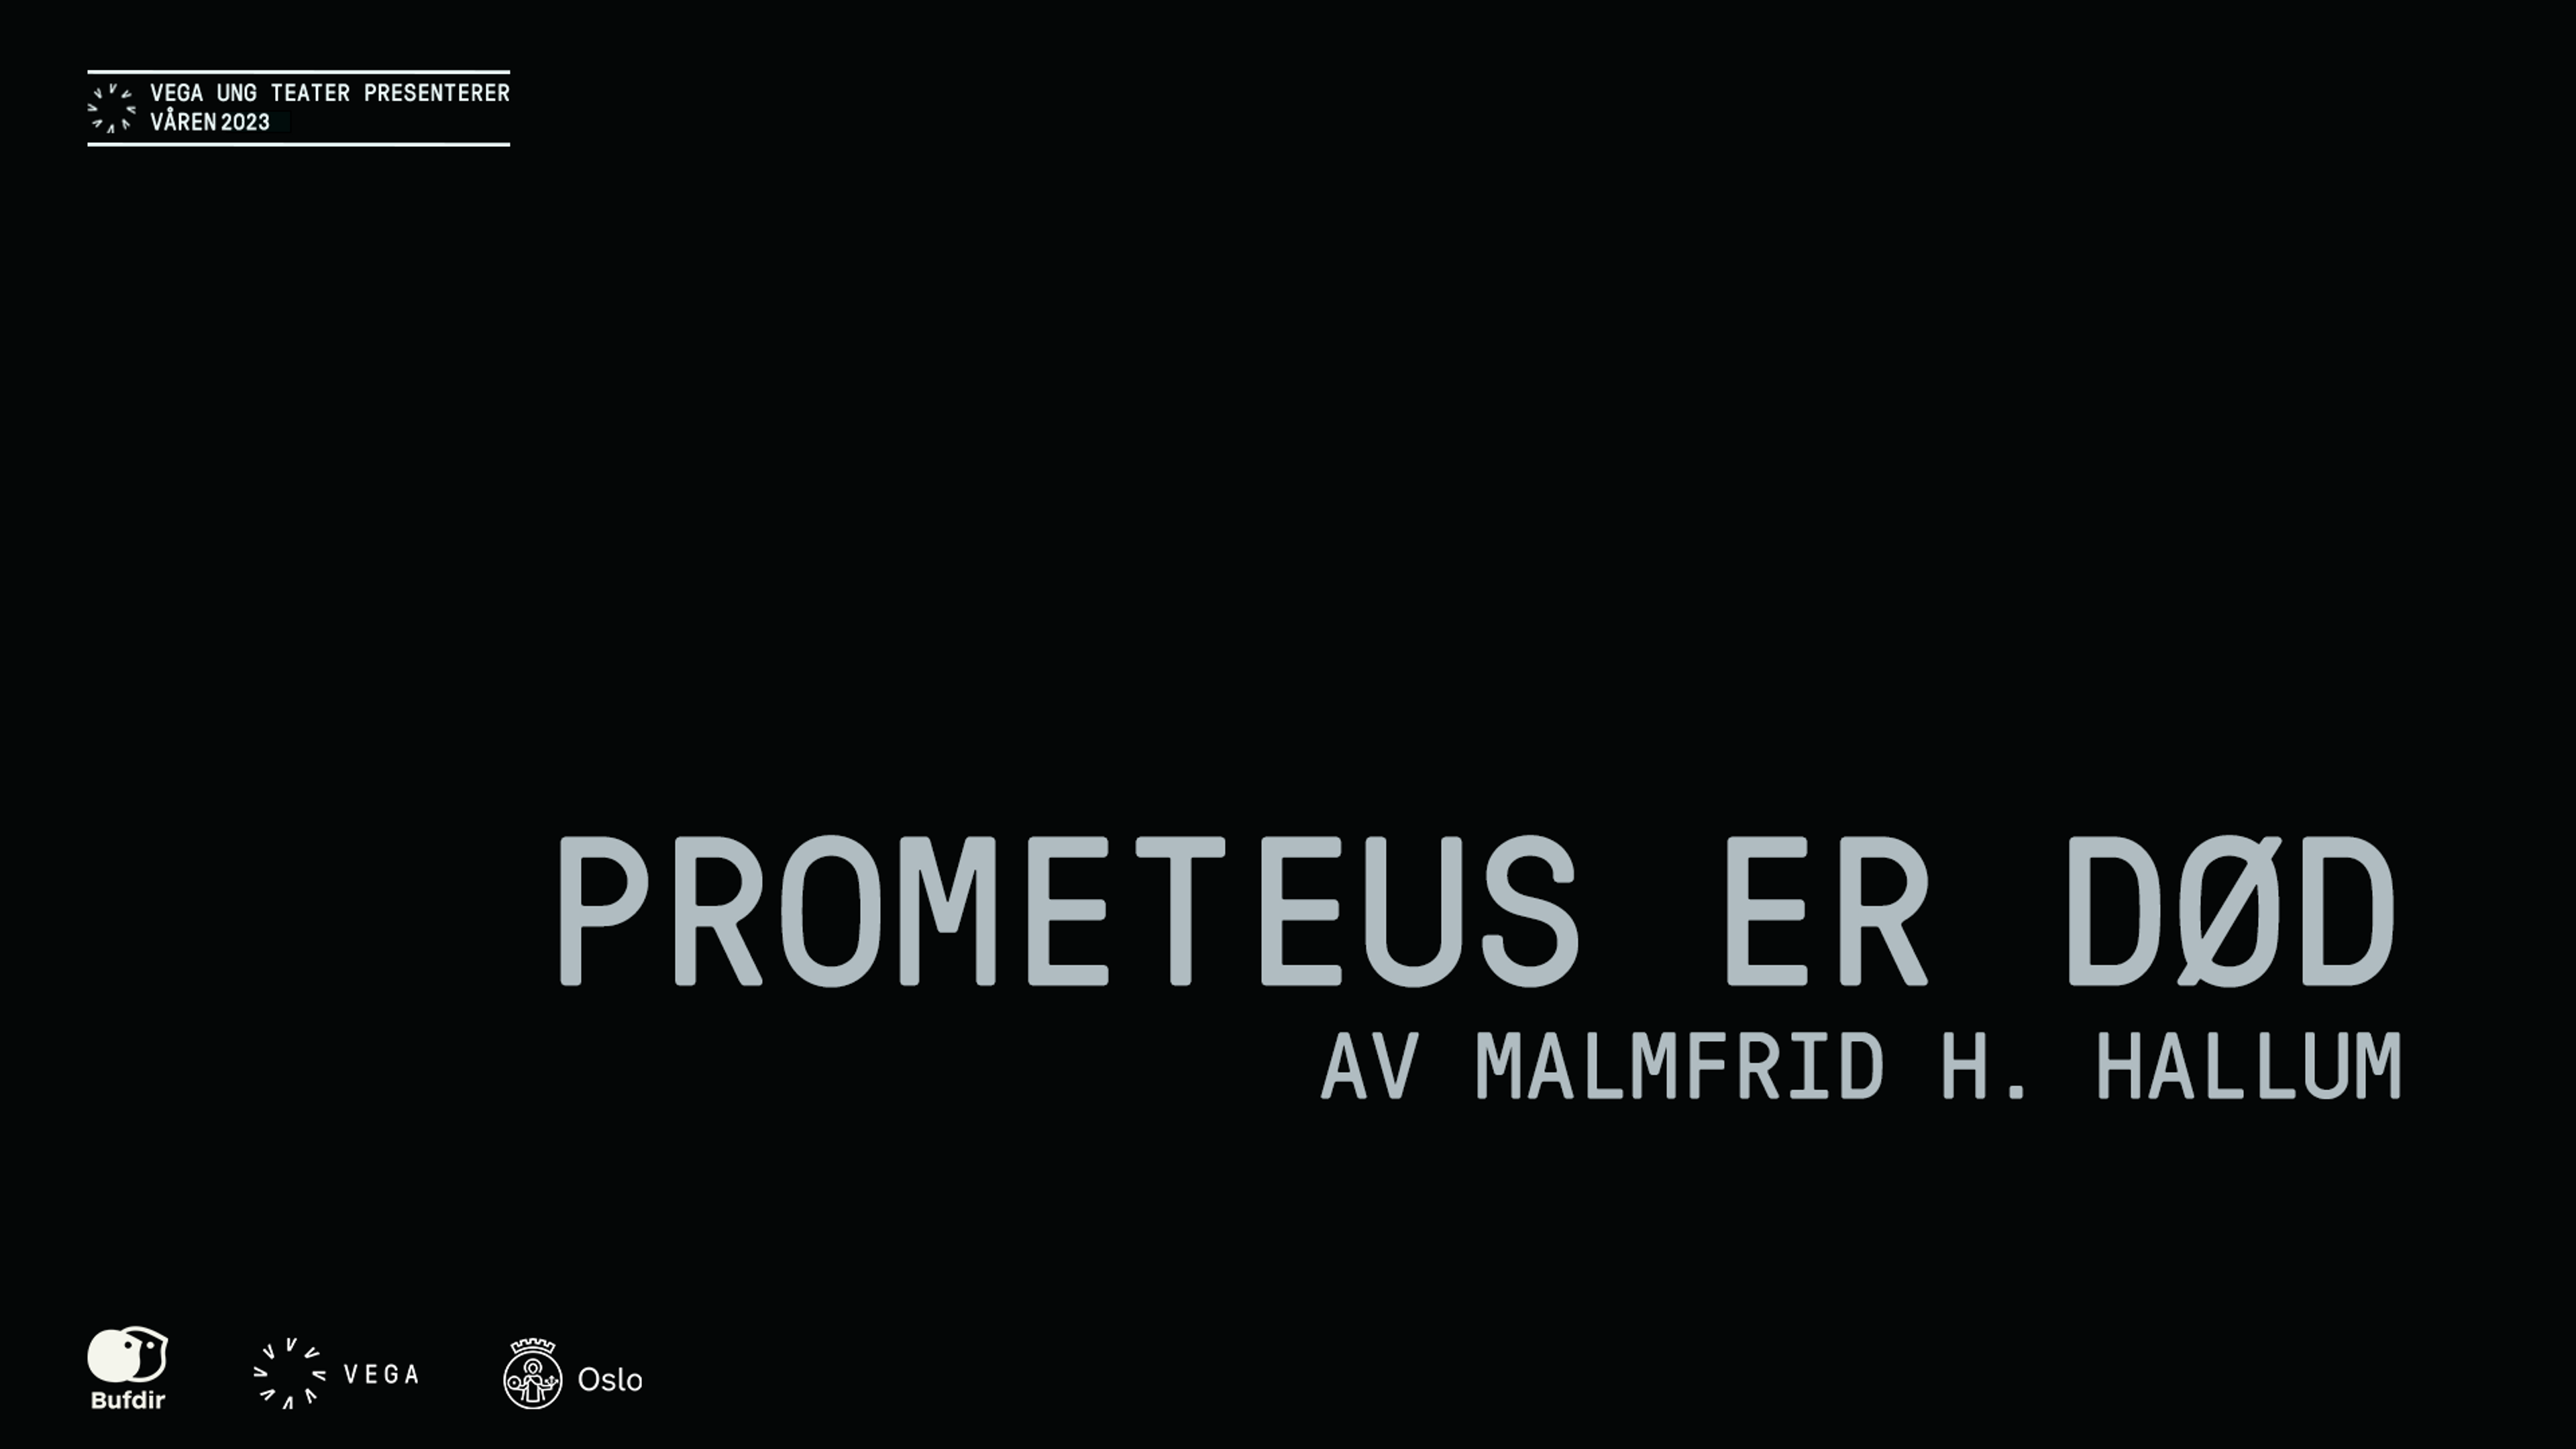 Prometeus er død